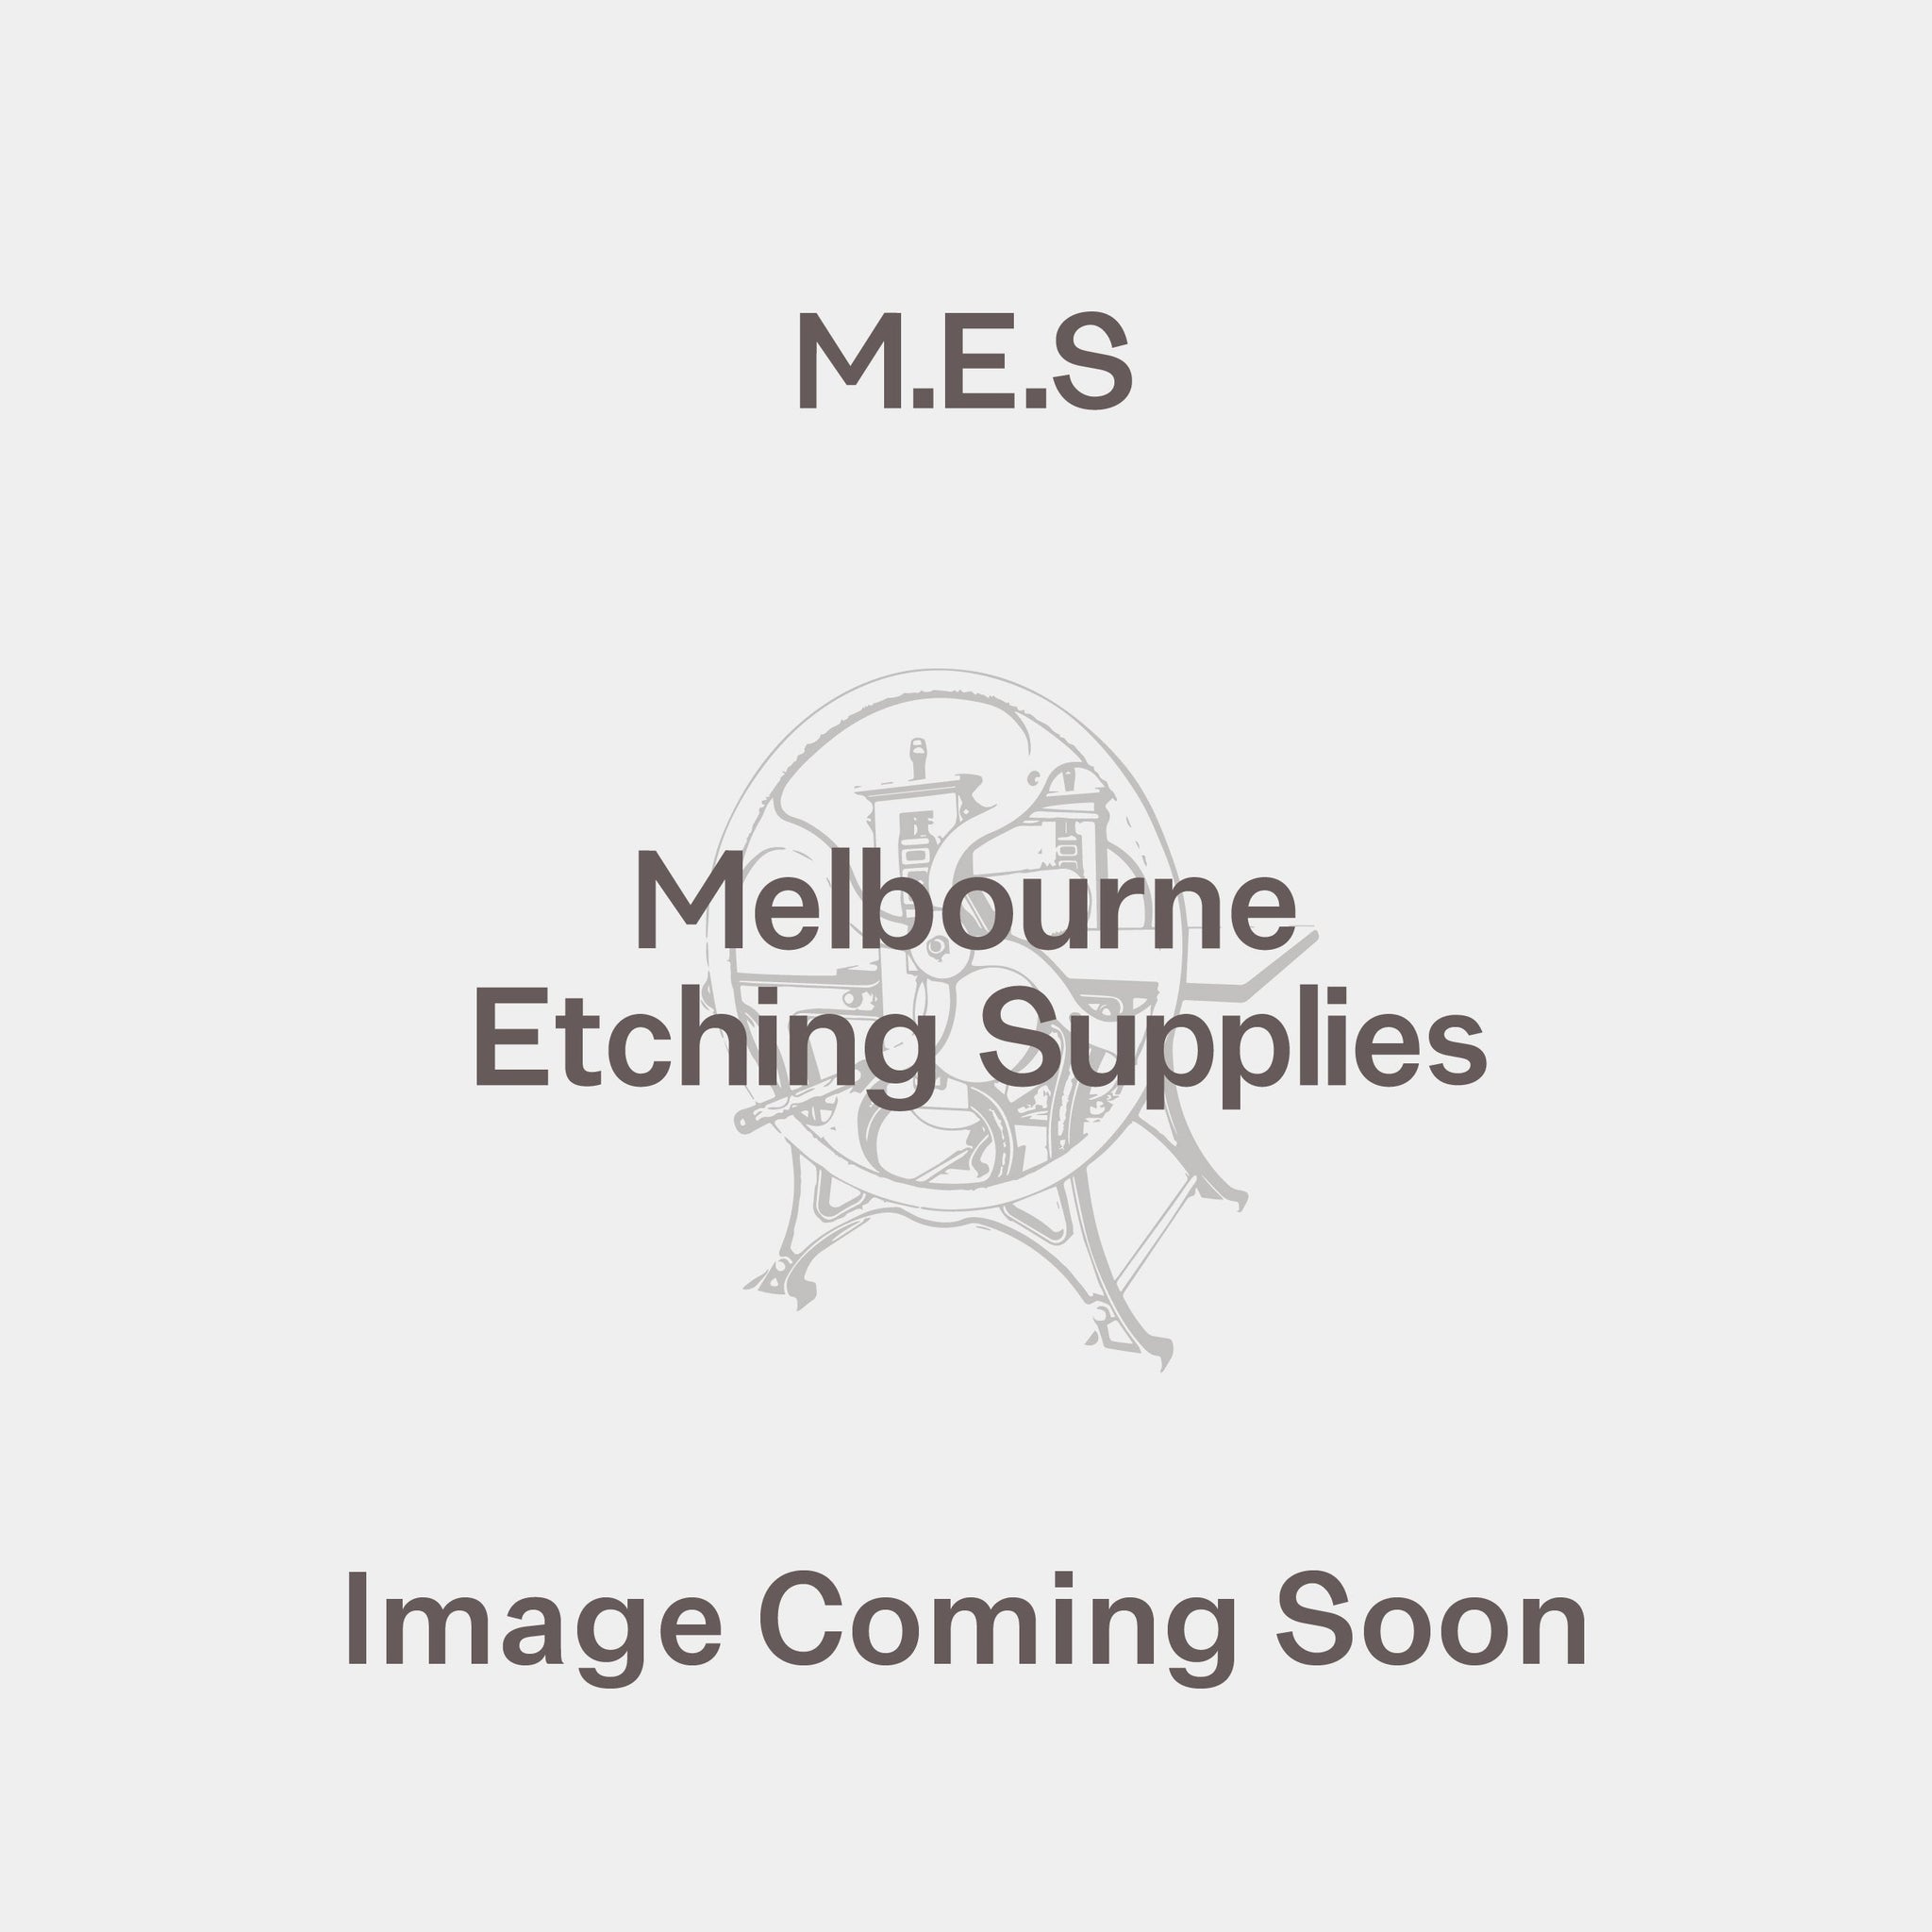 Khadi Smooth 640gsm 56x76cm - Melbourne Etching Supplies